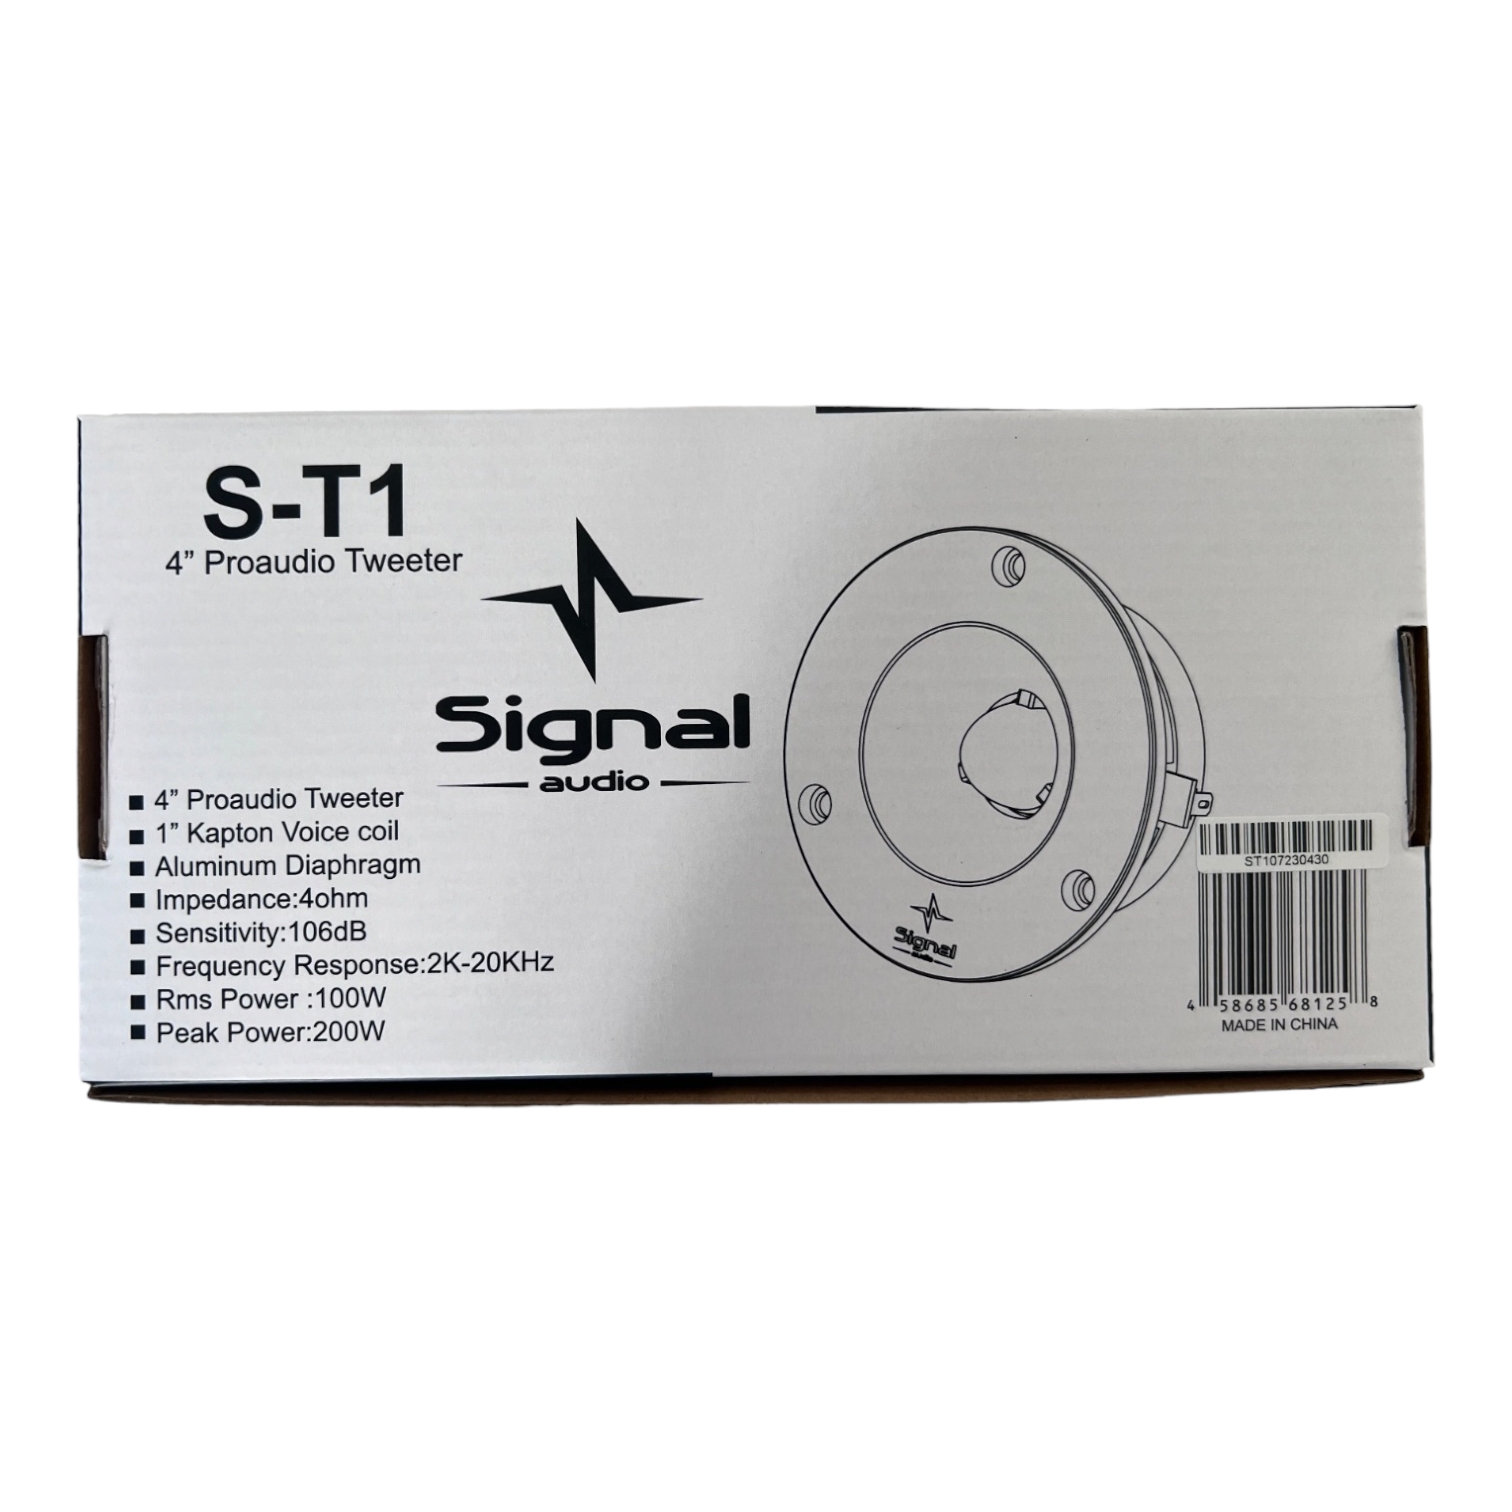 Super tweeter 4 inch audio signal model S-T1